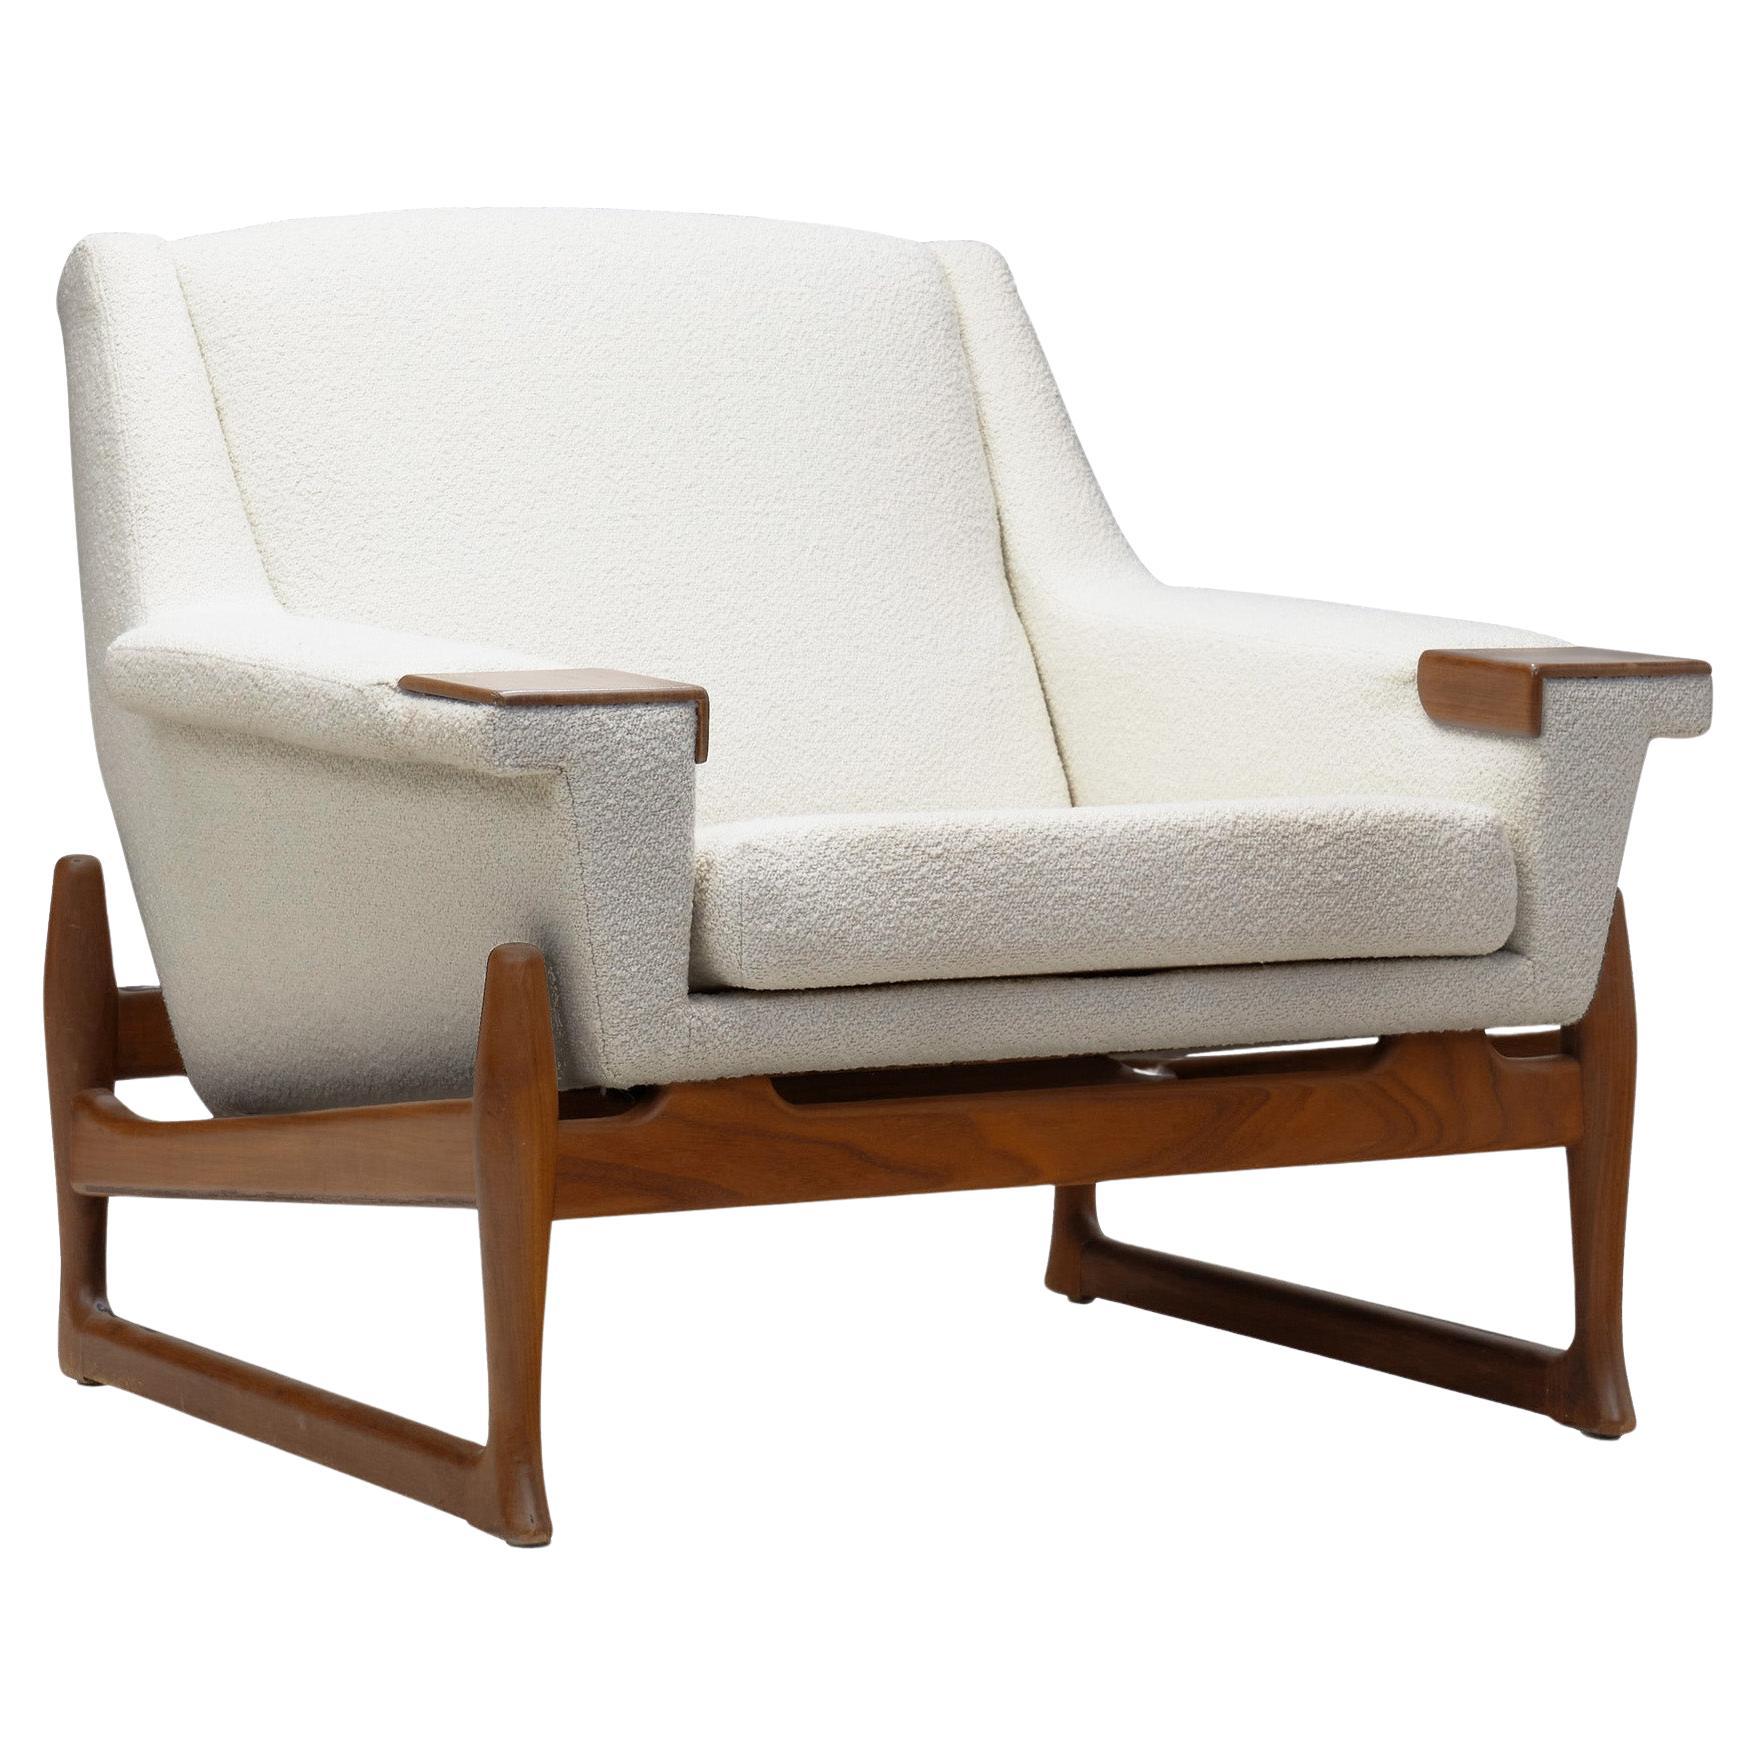 Johannes Andersen "Excellent" Lounge Chair, Sweden 1960s For Sale